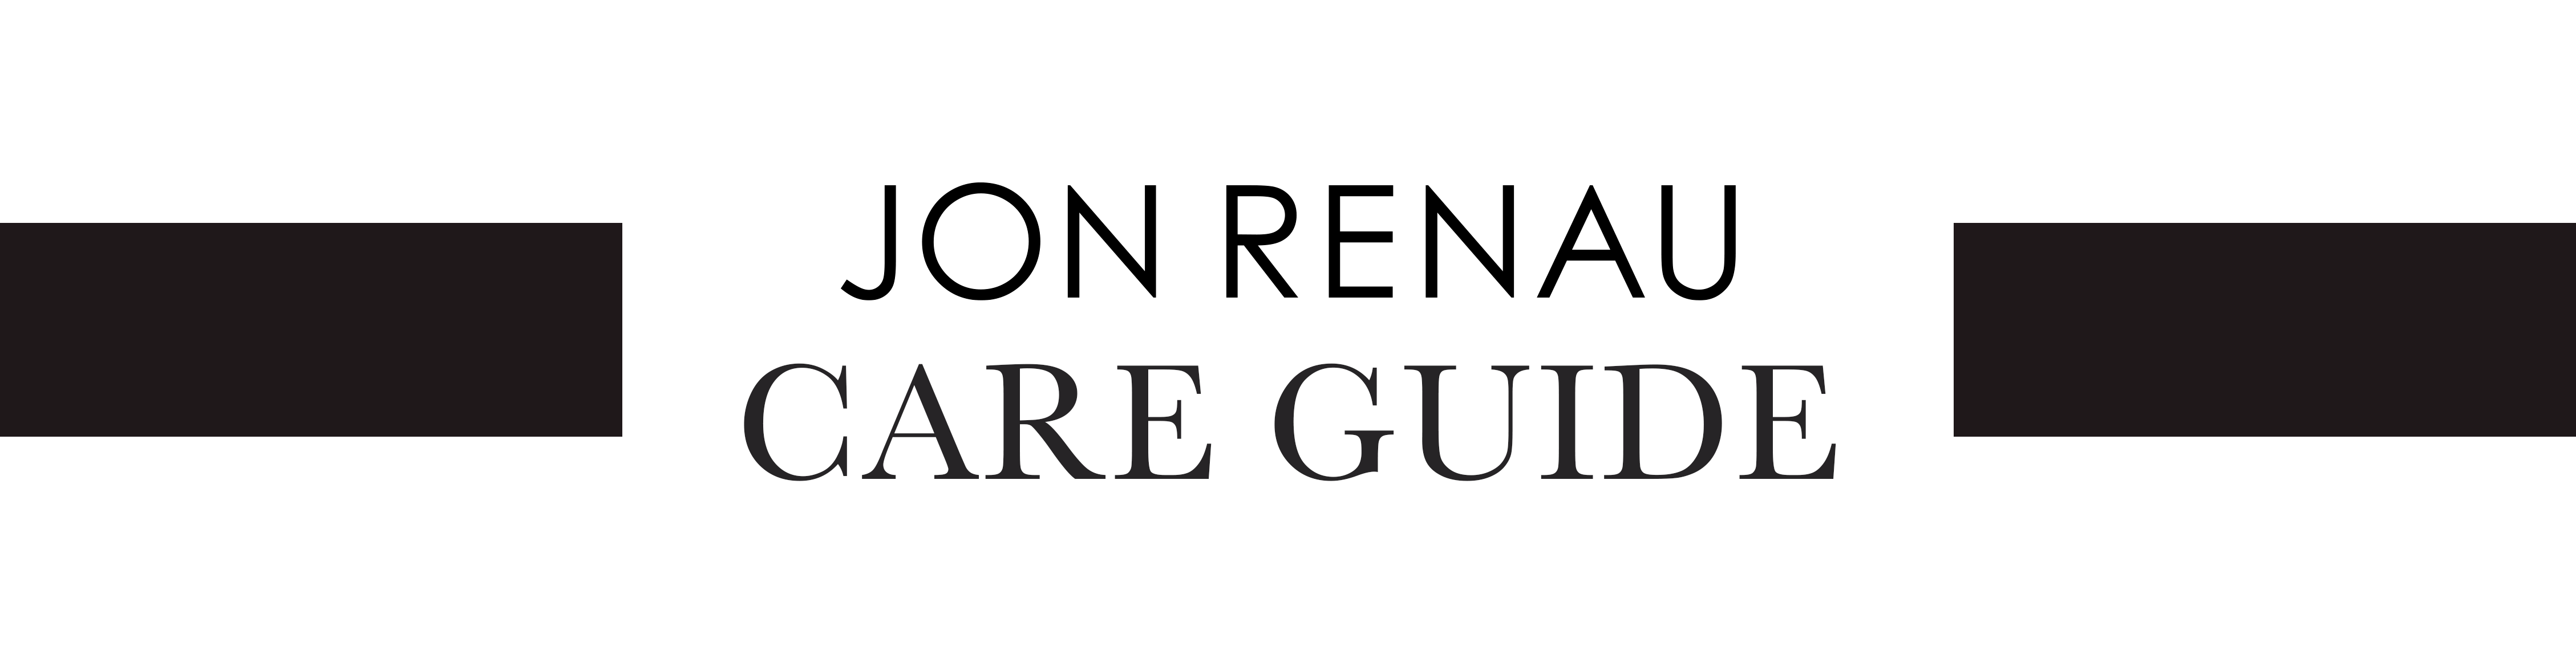 Jon Renau Care Guide